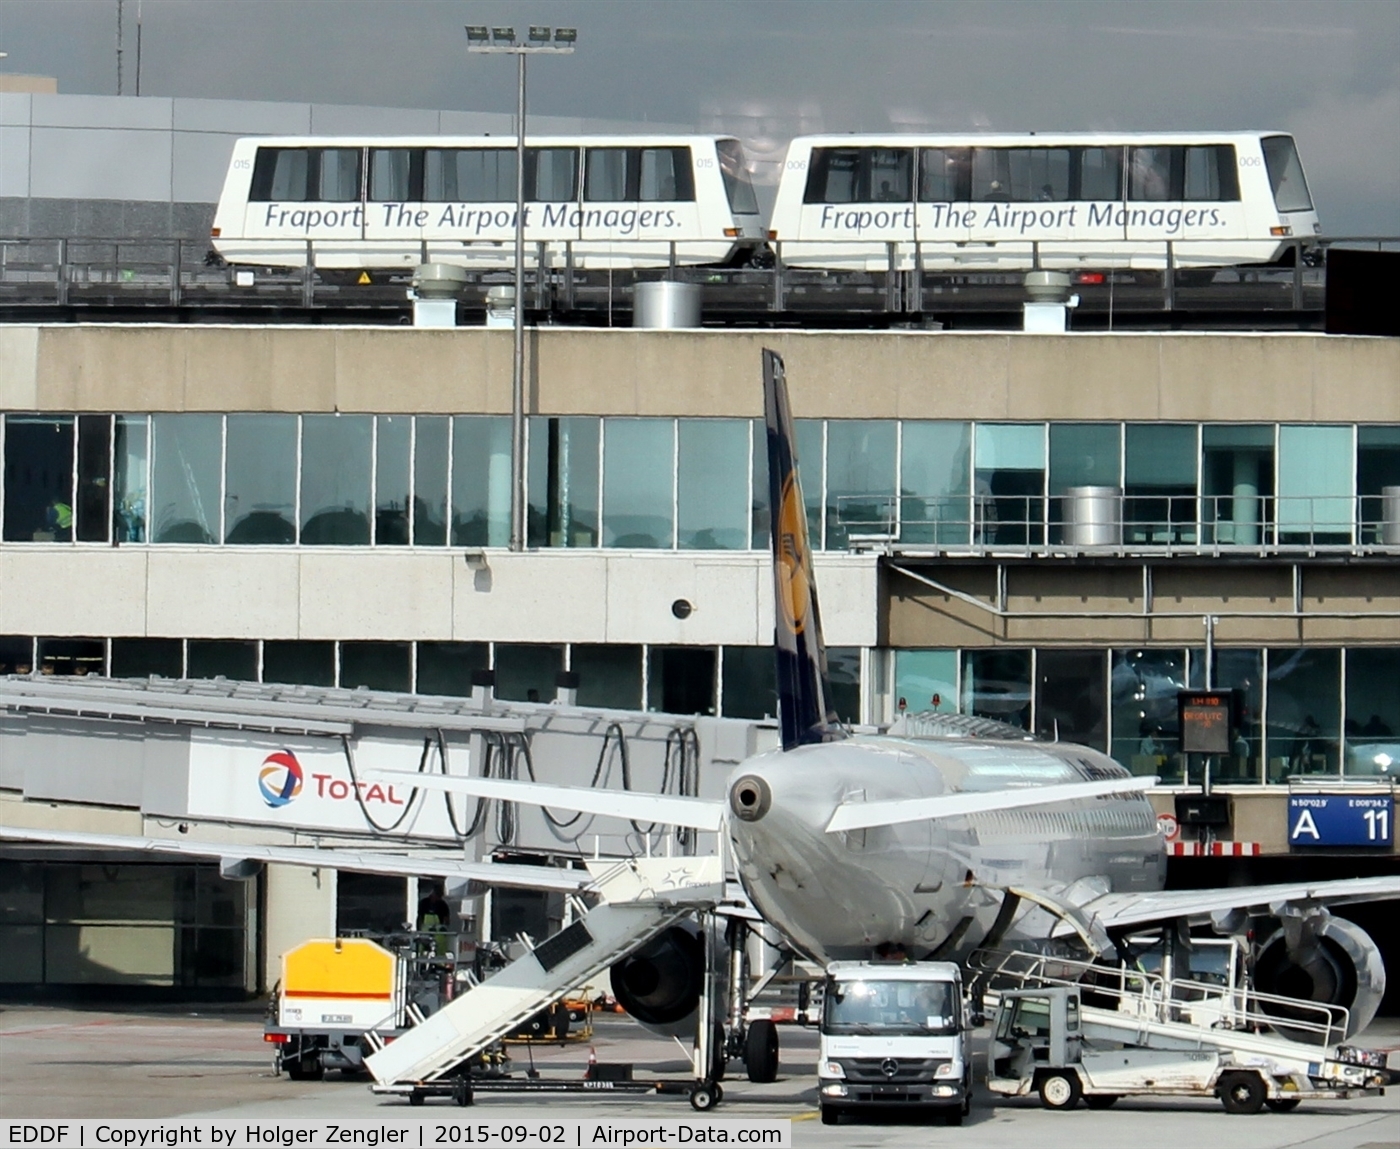 Frankfurt International Airport, Frankfurt am Main Germany (EDDF) - Situation at terminal 1.....